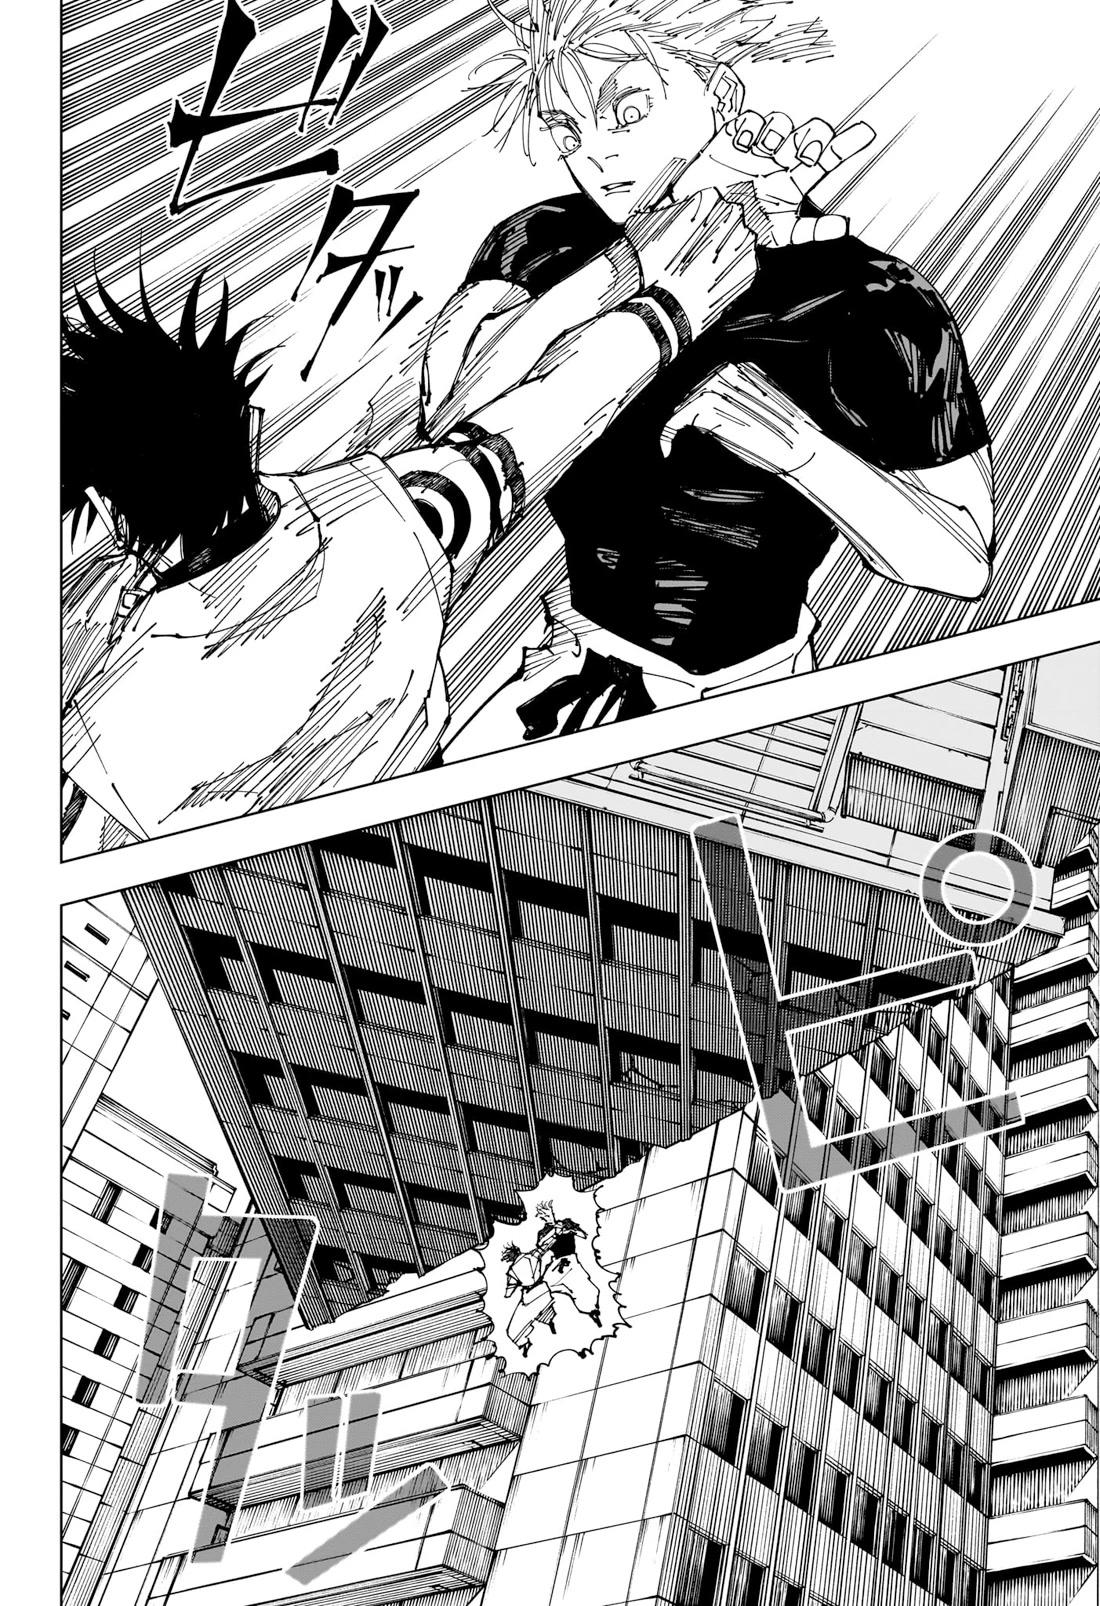 Jujutsu Kaisen Chapter 224: The Decisive Battle In The Uninhabited, Demon-Infested Shinjuku ② page 15 - Mangakakalot